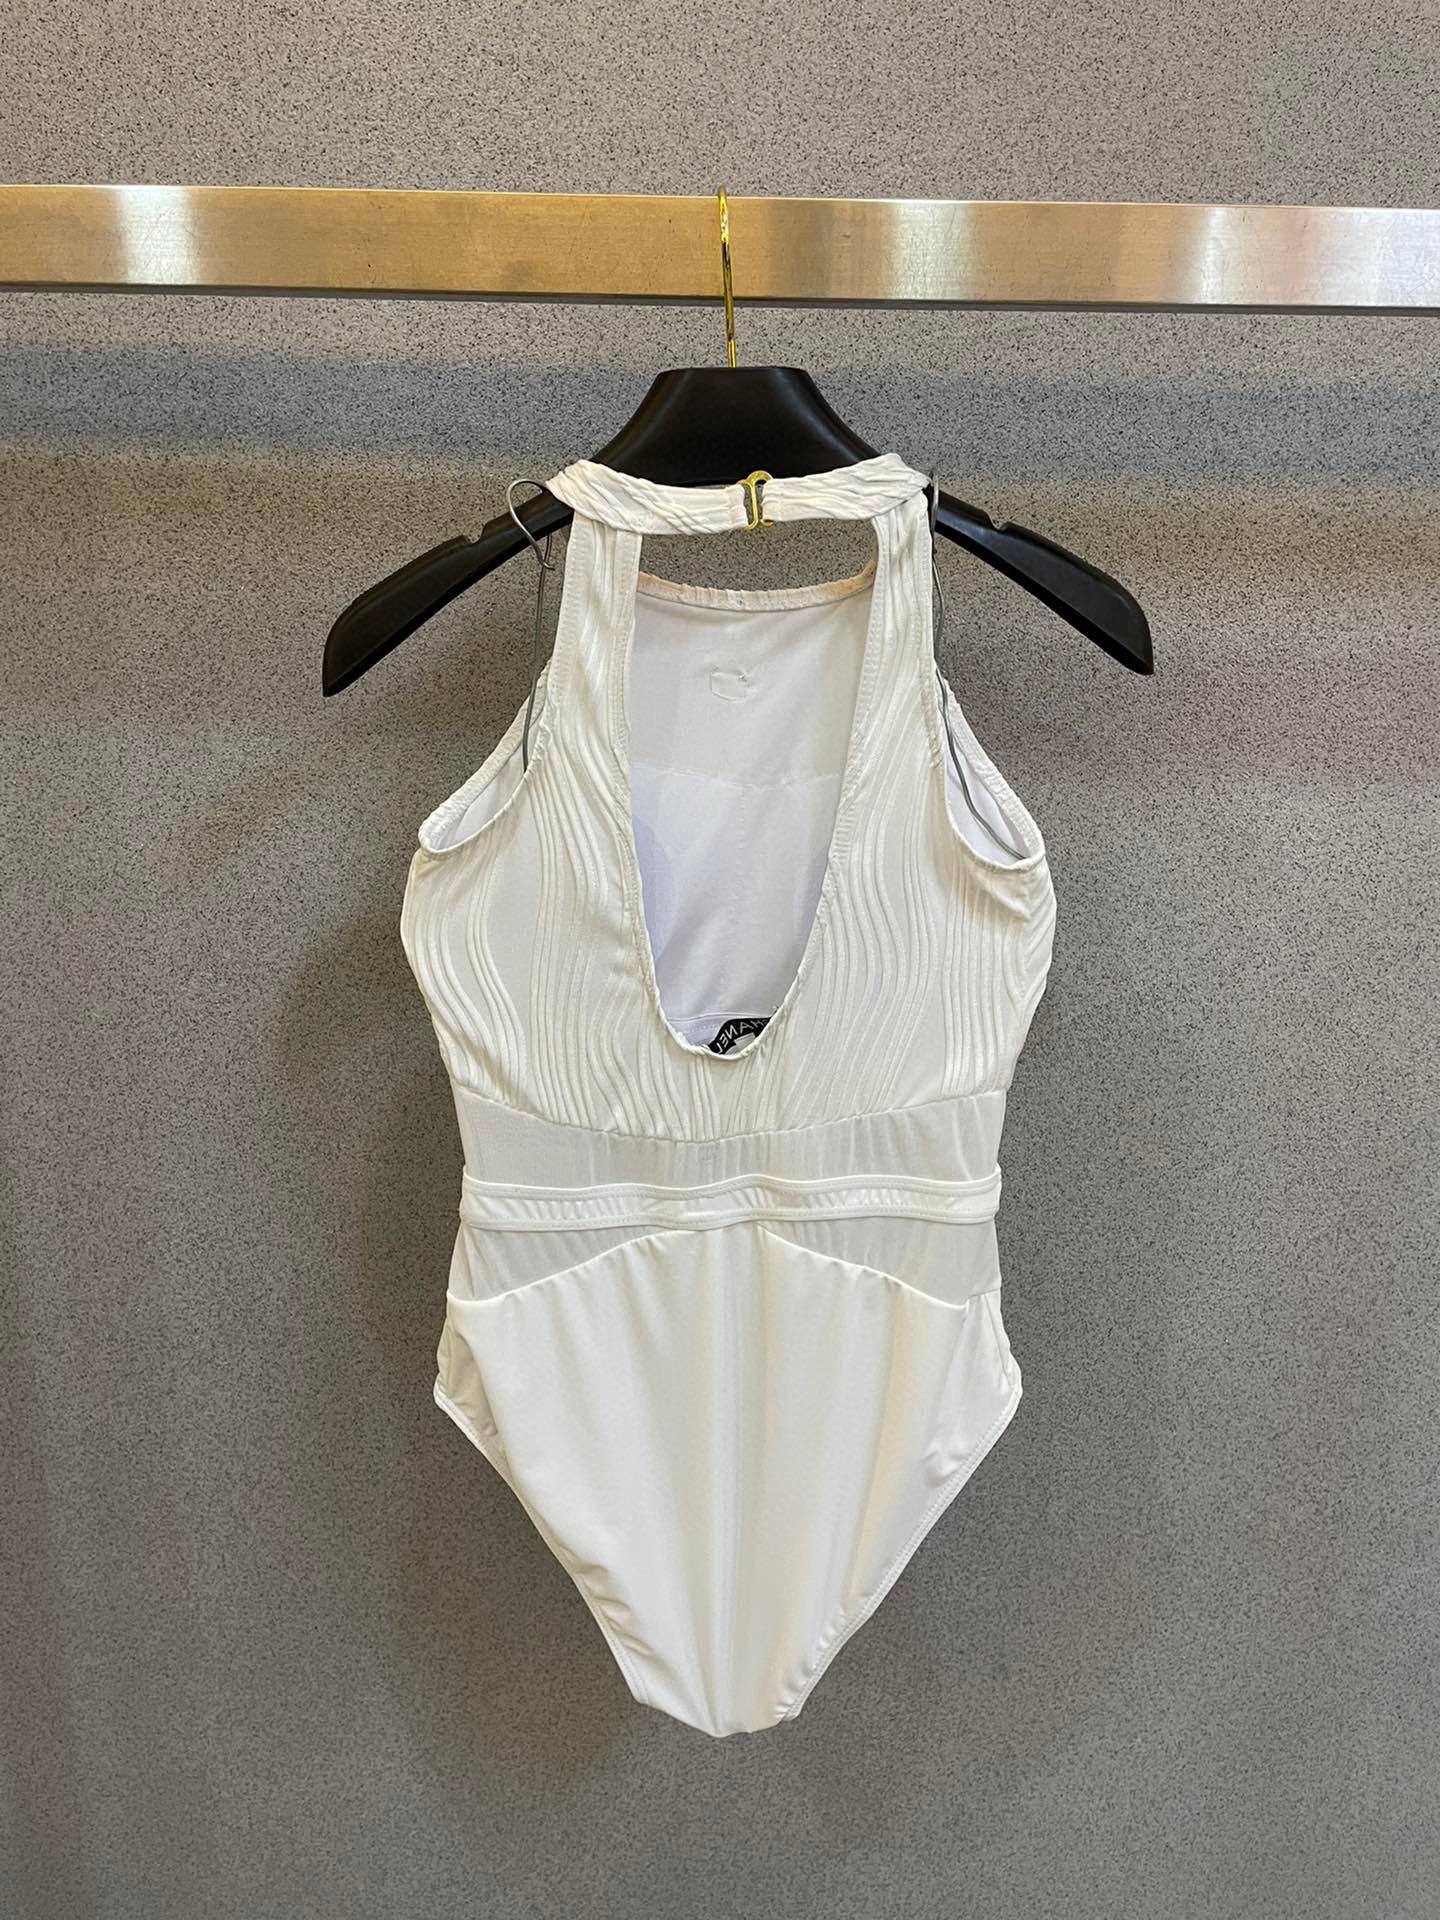 Chanel新款连体泳衣️适合多种场景的游泳衣️海边游泳池温泉水上乐园漂流都可以内搭外穿也完全可以面料透